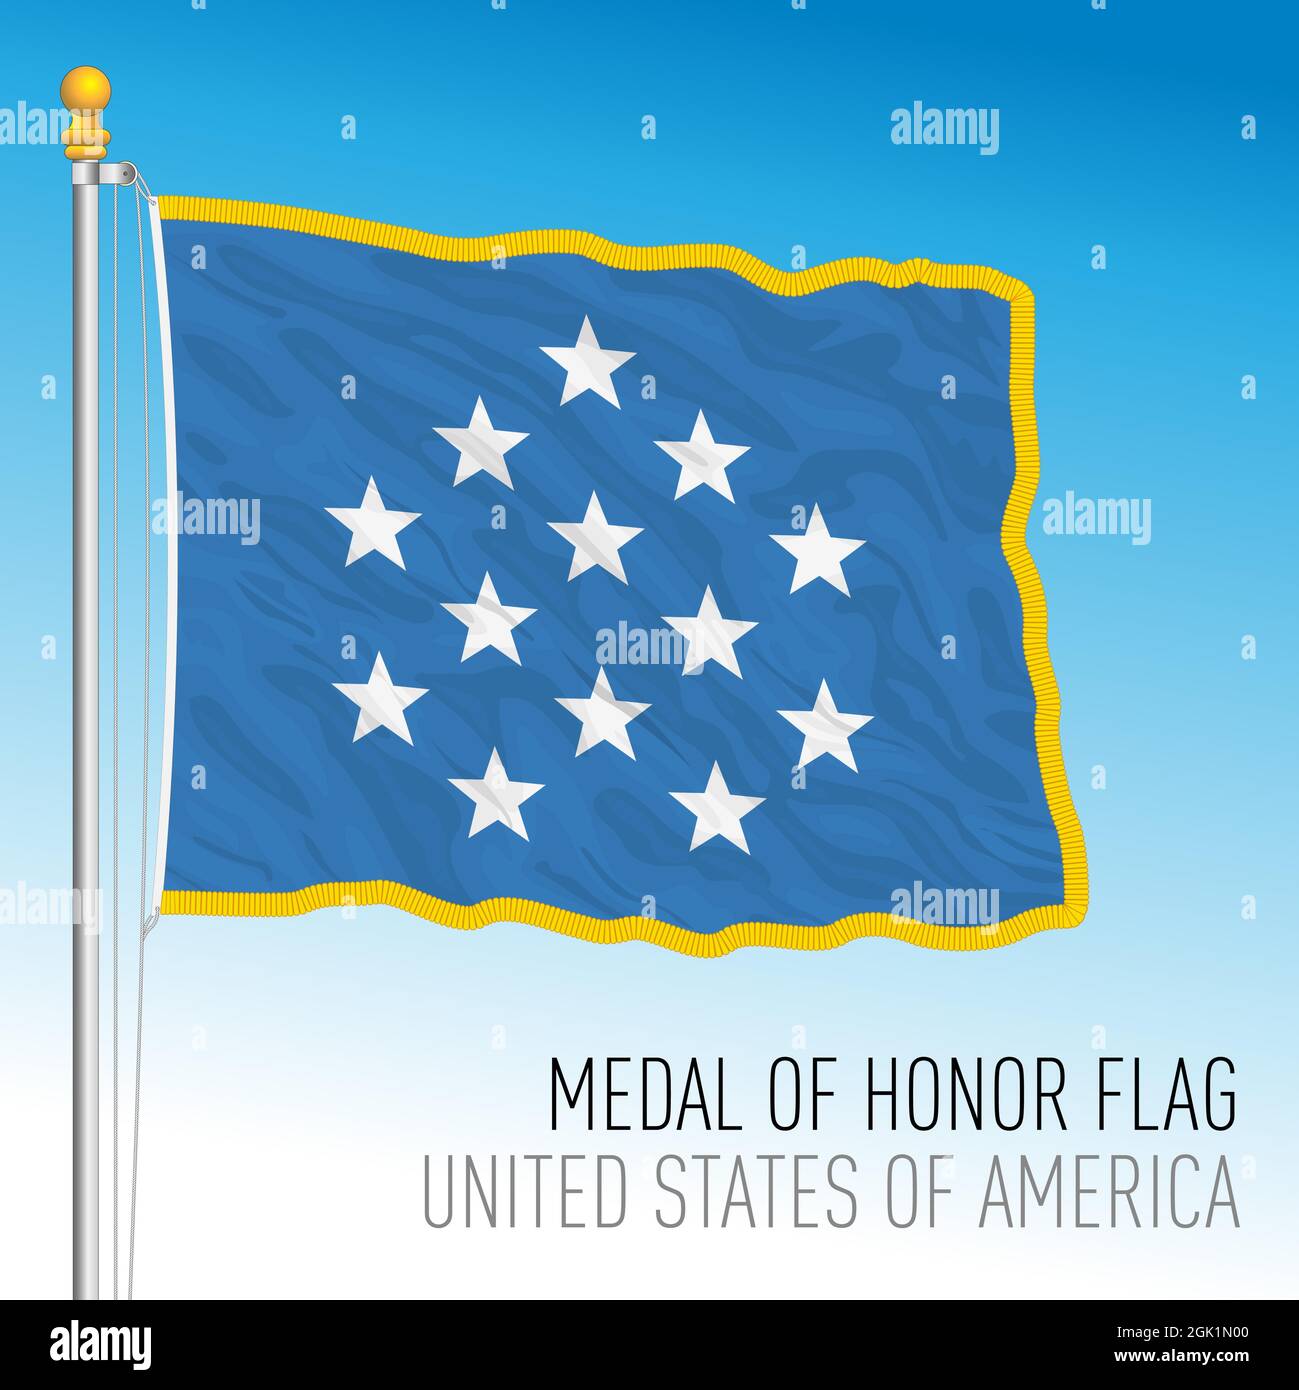 US Medal of Honor Flagge, Vereinigte Staaten von Amerika, Vektorgrafik Stock Vektor